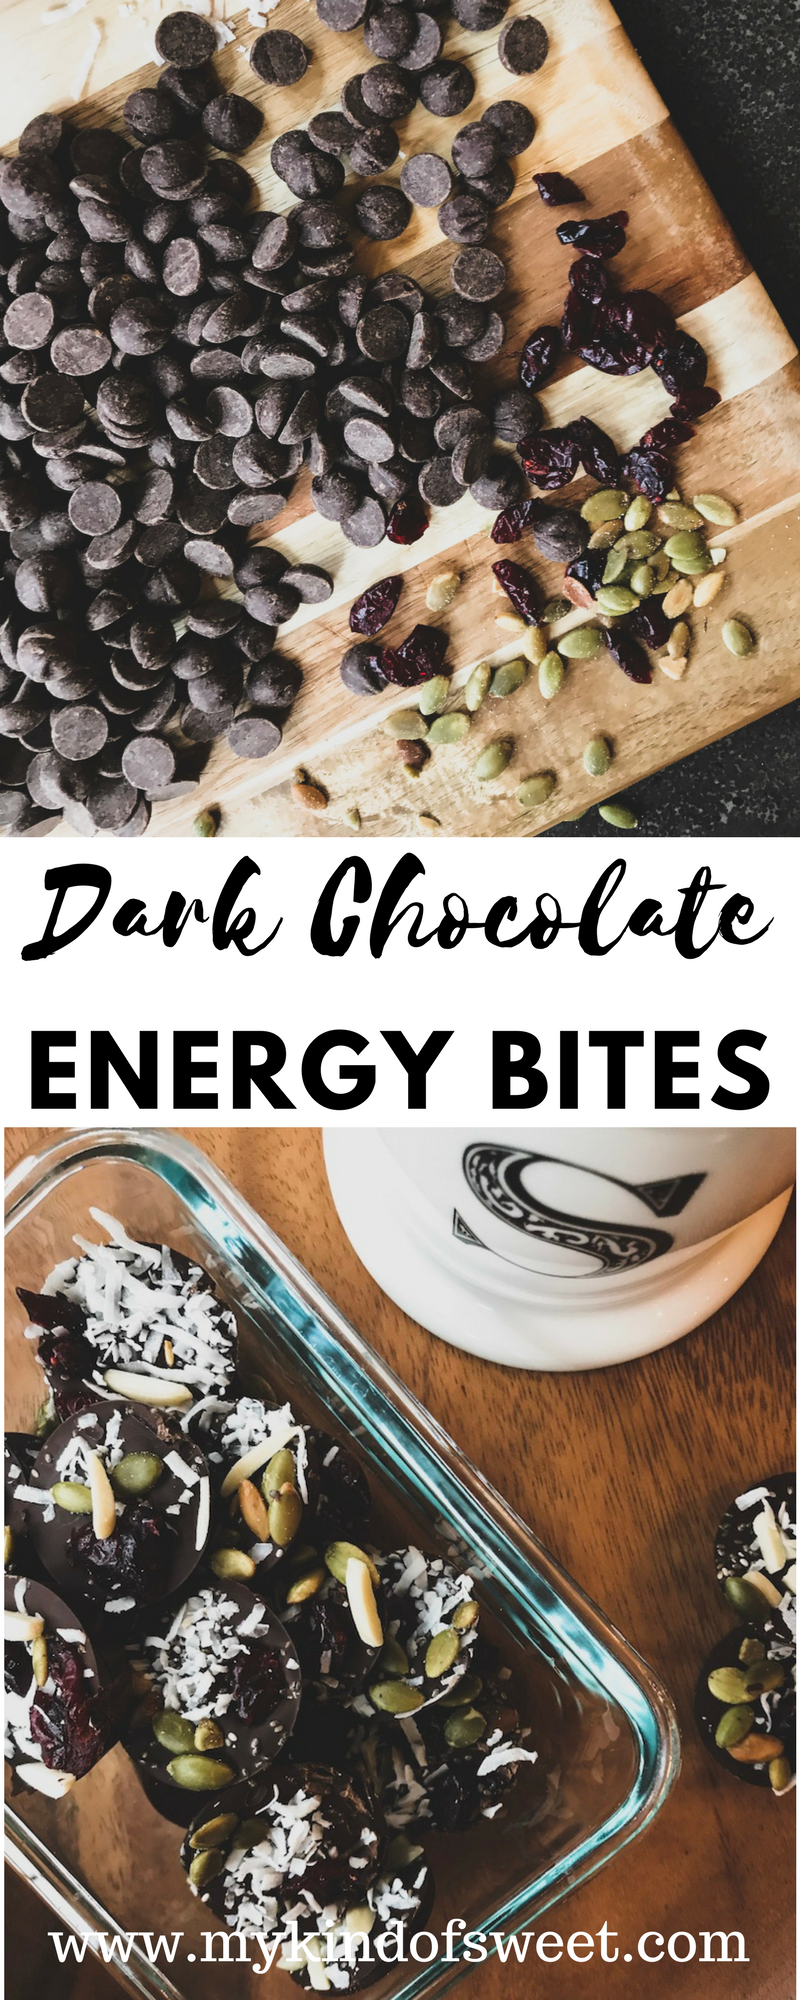 Dark chocolate energy bites